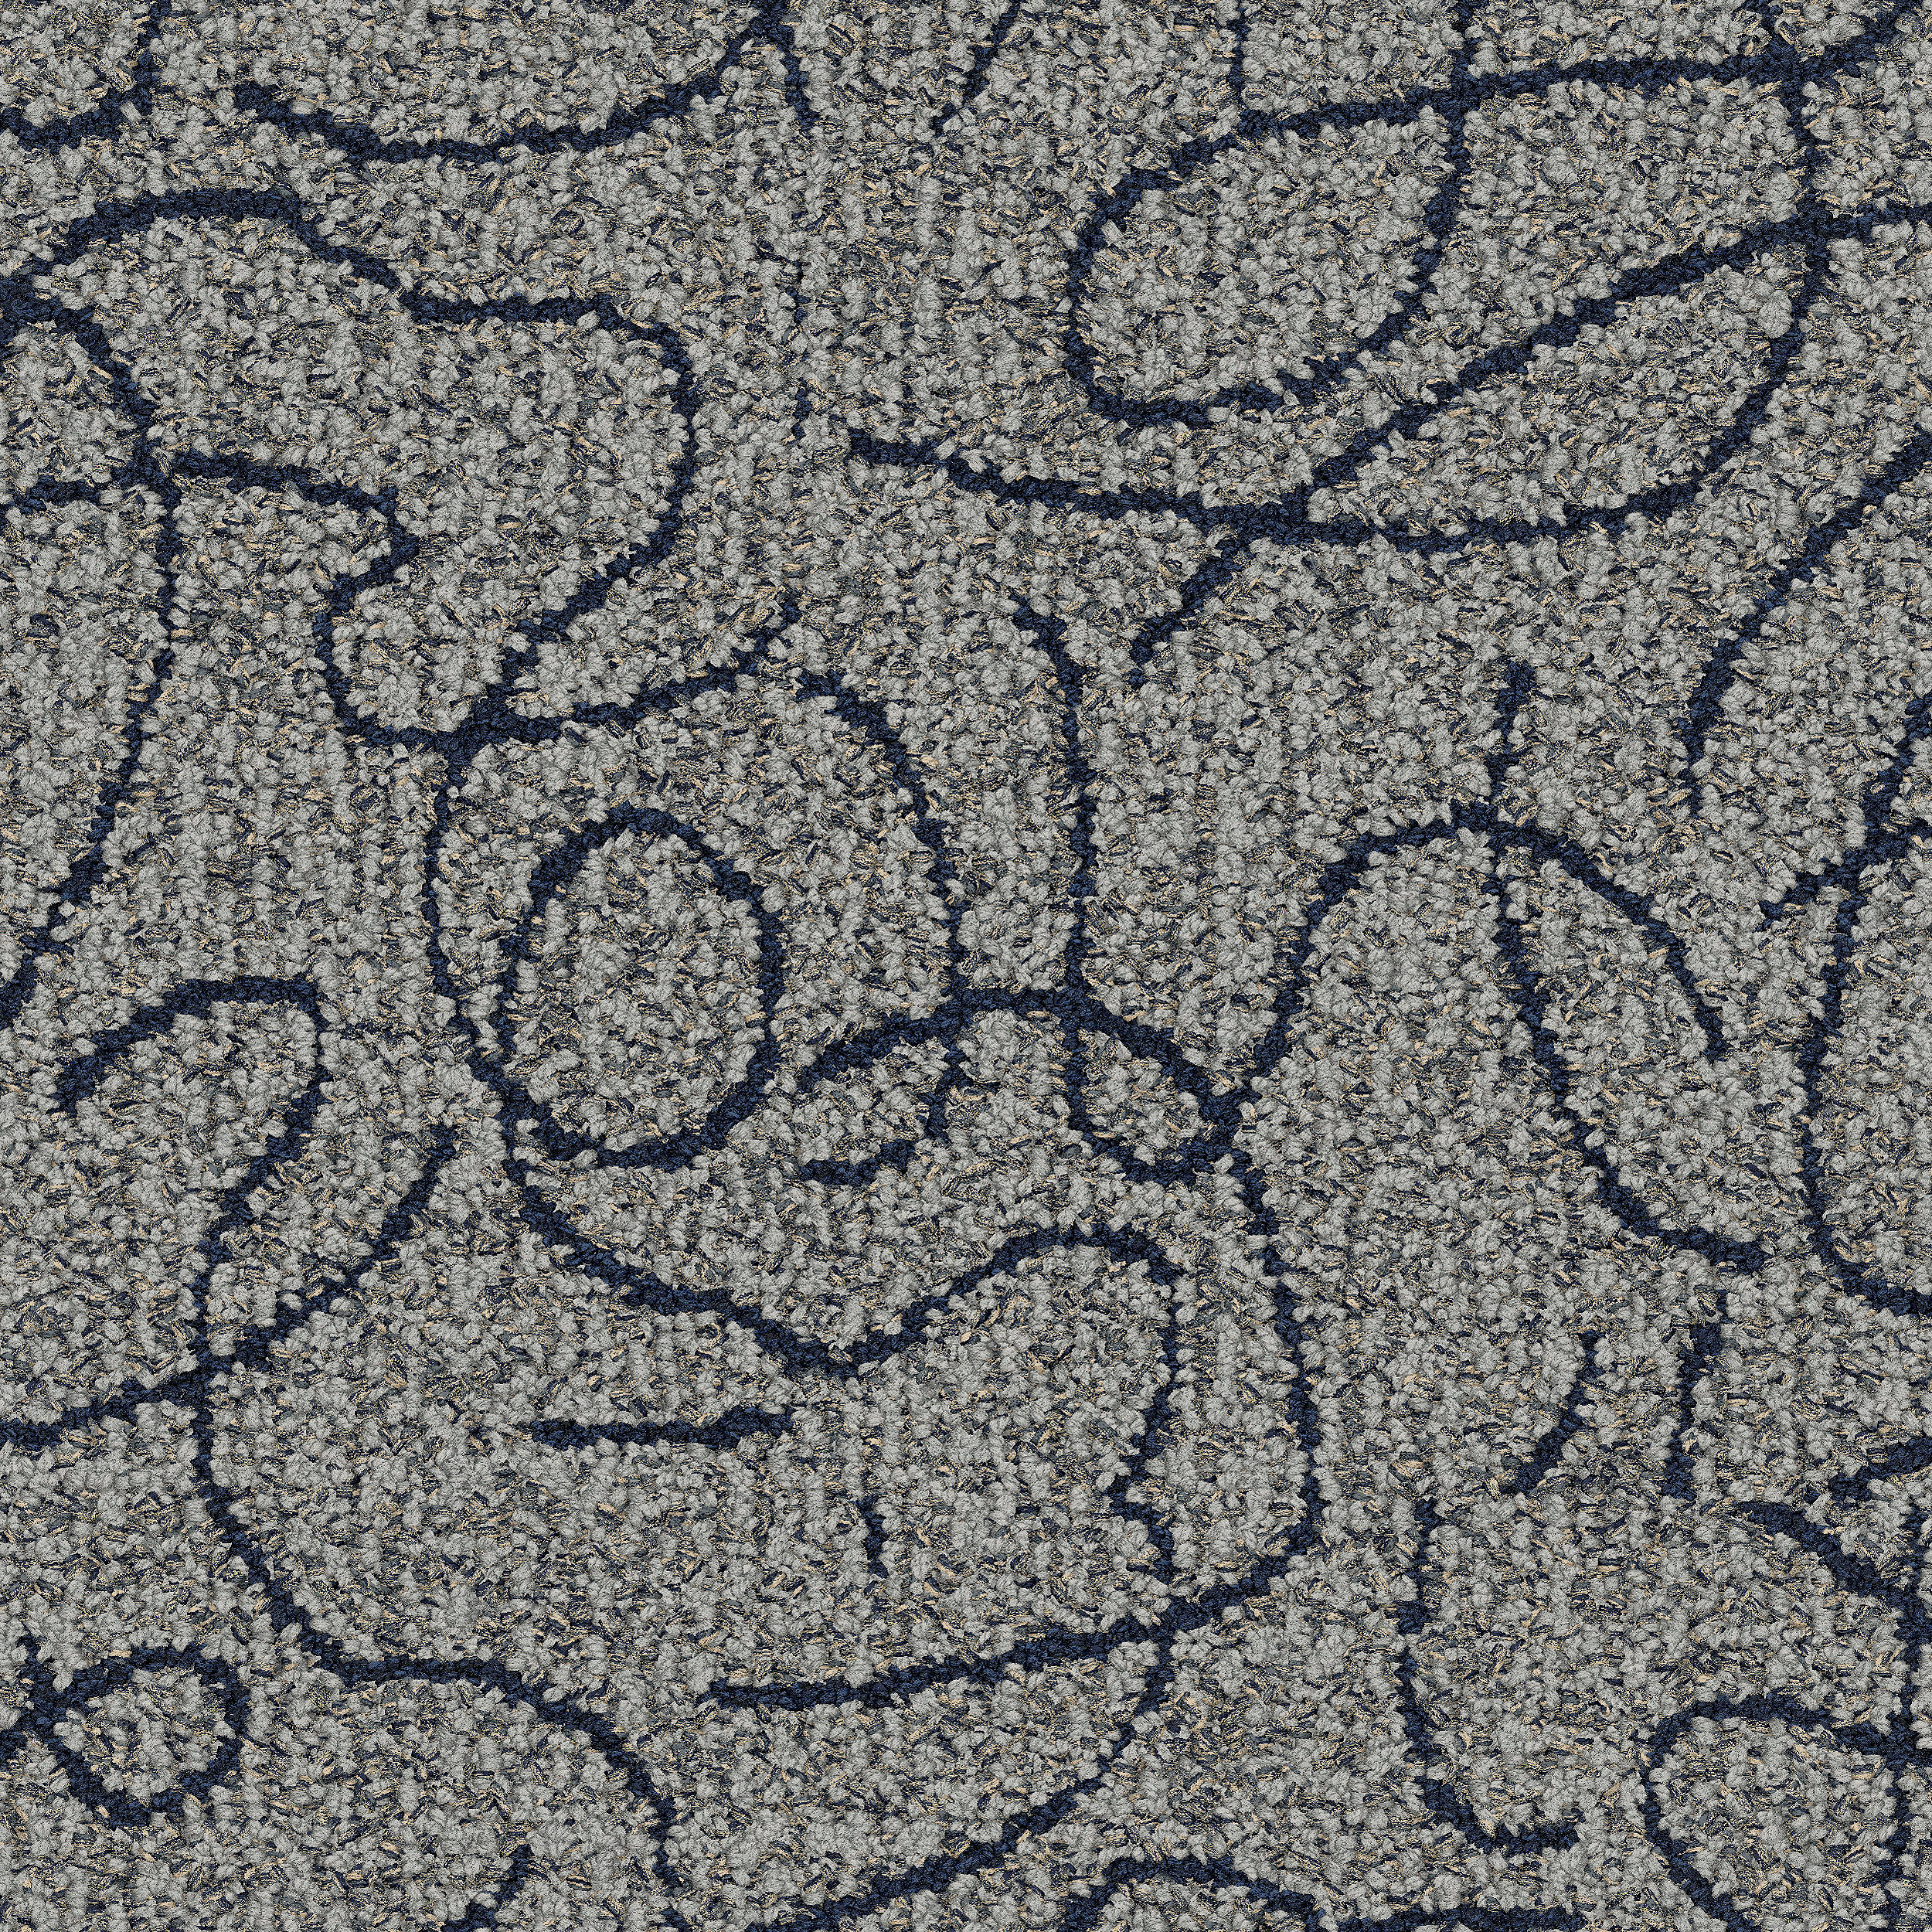 Unspooled carpet tile in Pewter Bildnummer 4